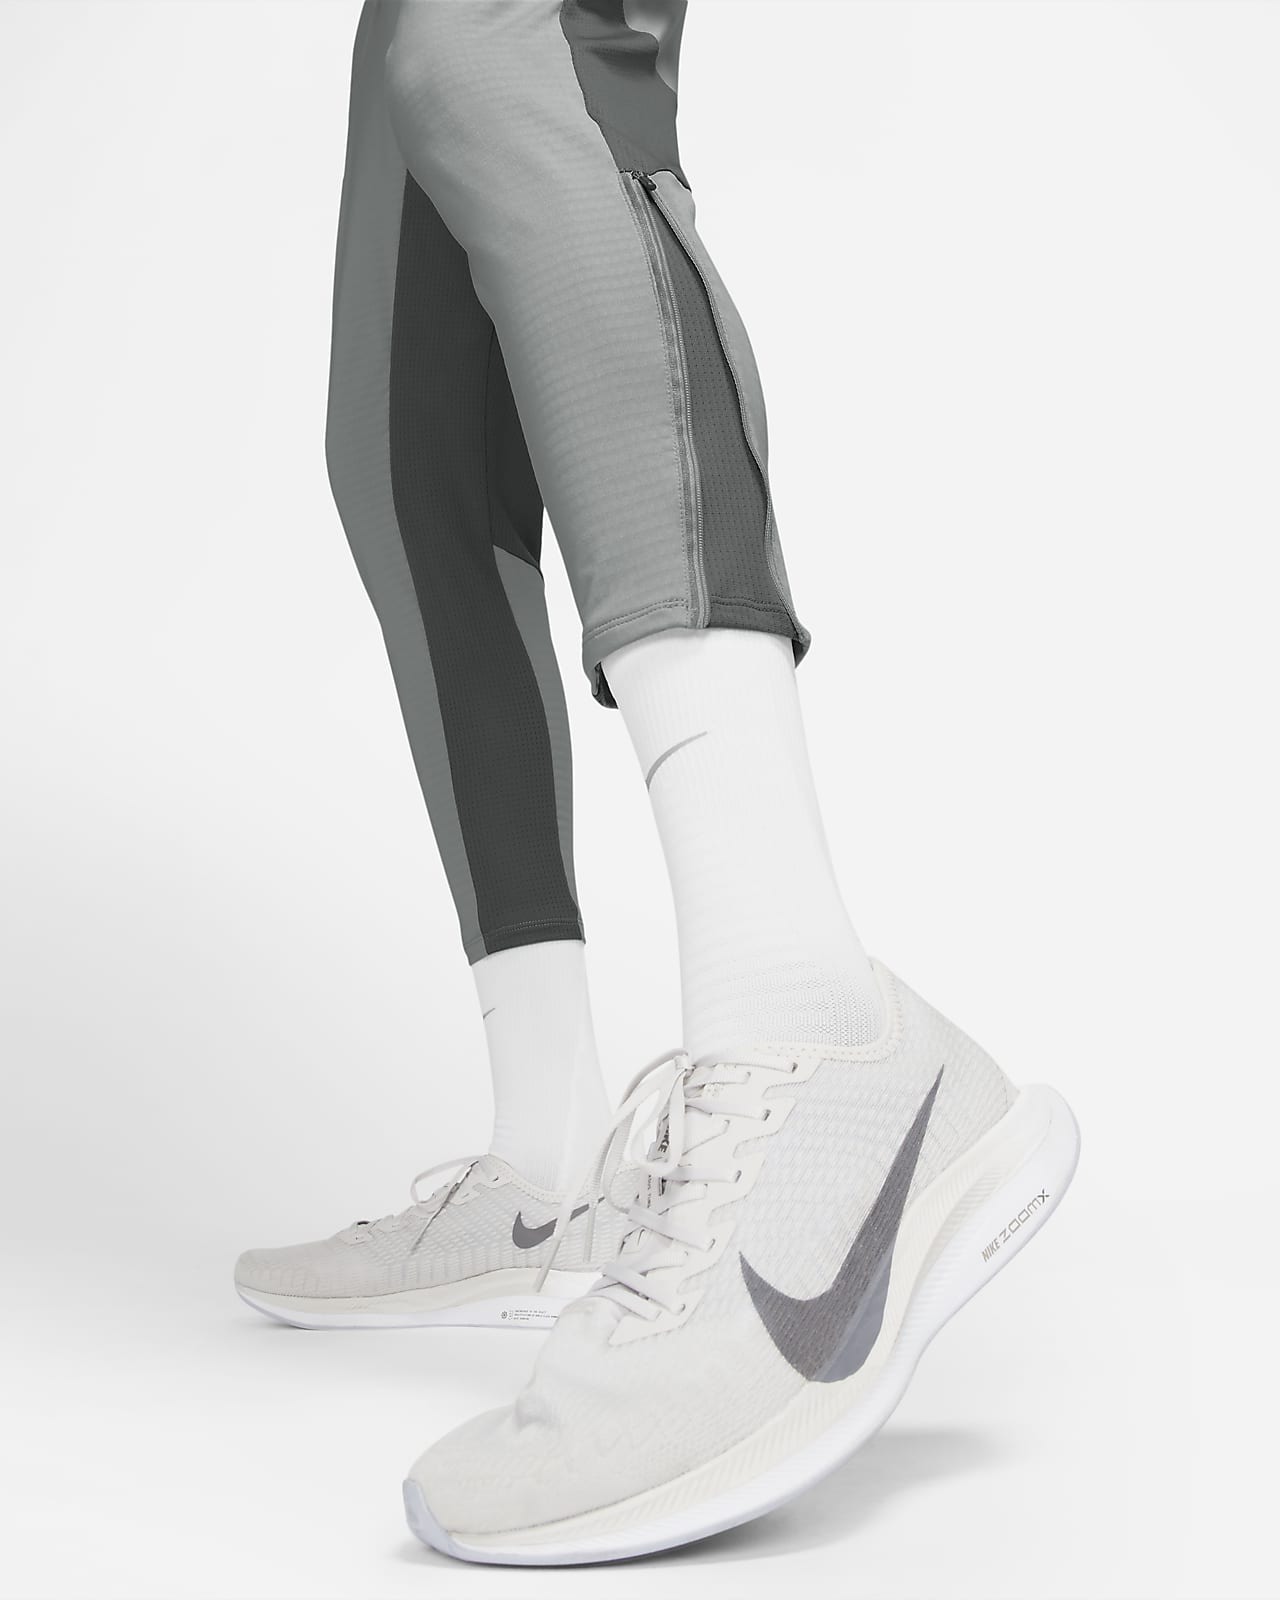 Collant de running Nike Stock pour Homme - NT0313-451 - Bleu Marine